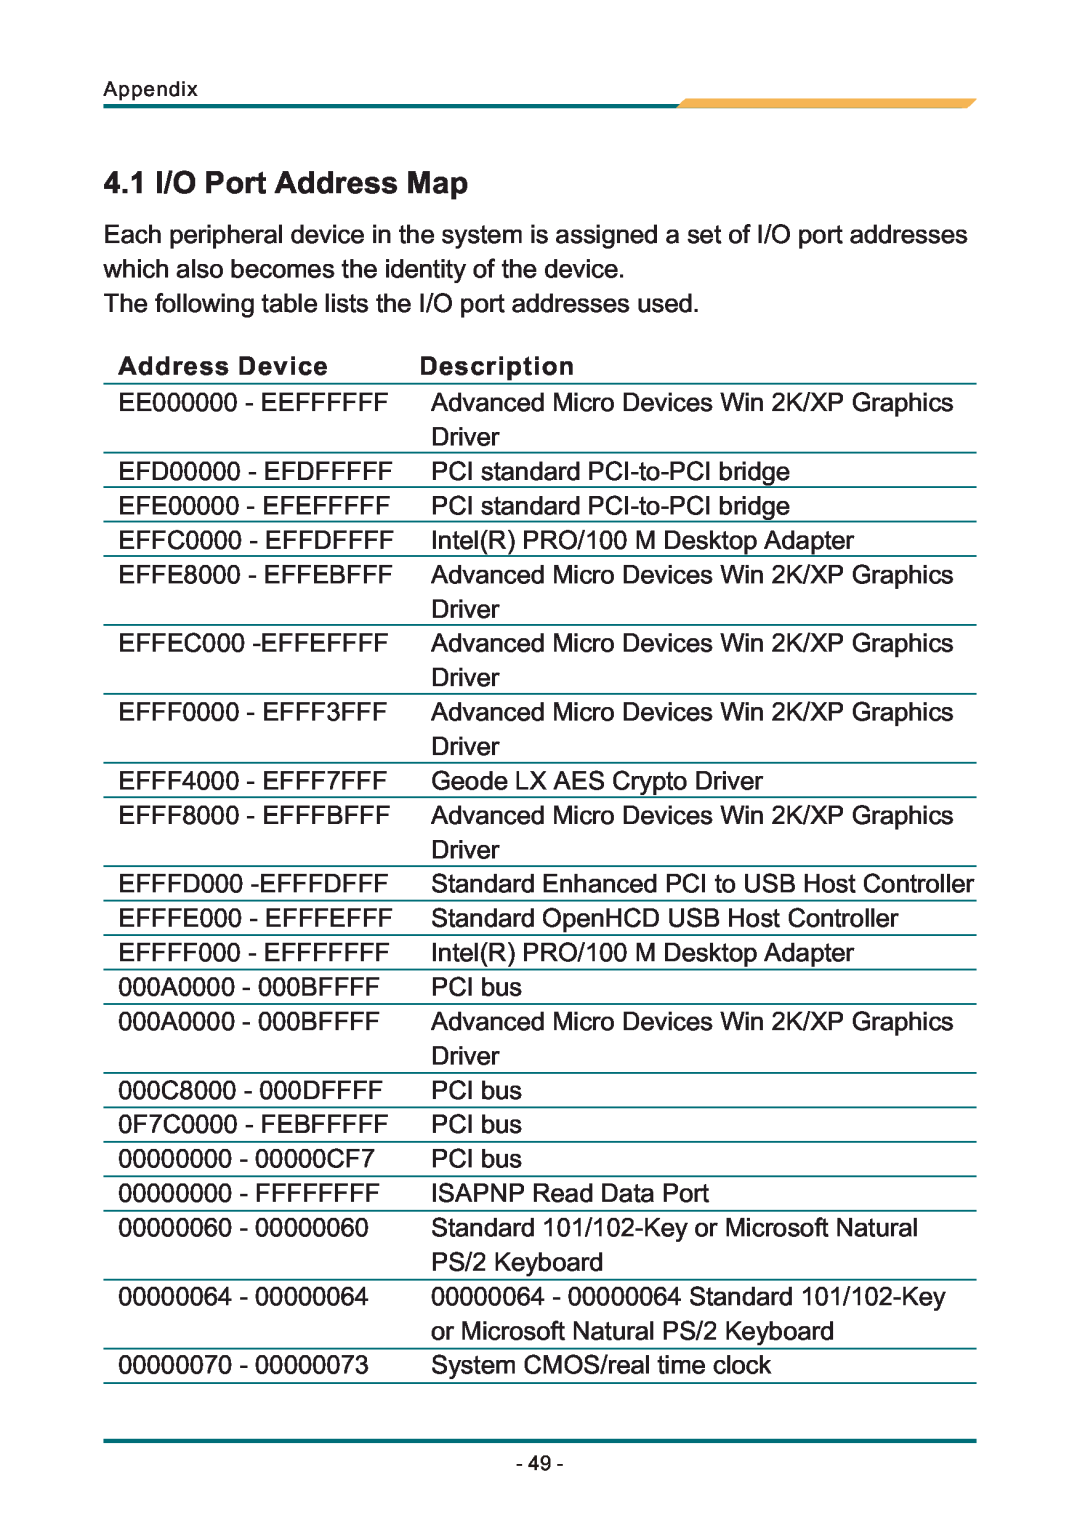 AMD SBX-5363 manual 4.1 I/O Port Address Map, Address Device, Description 